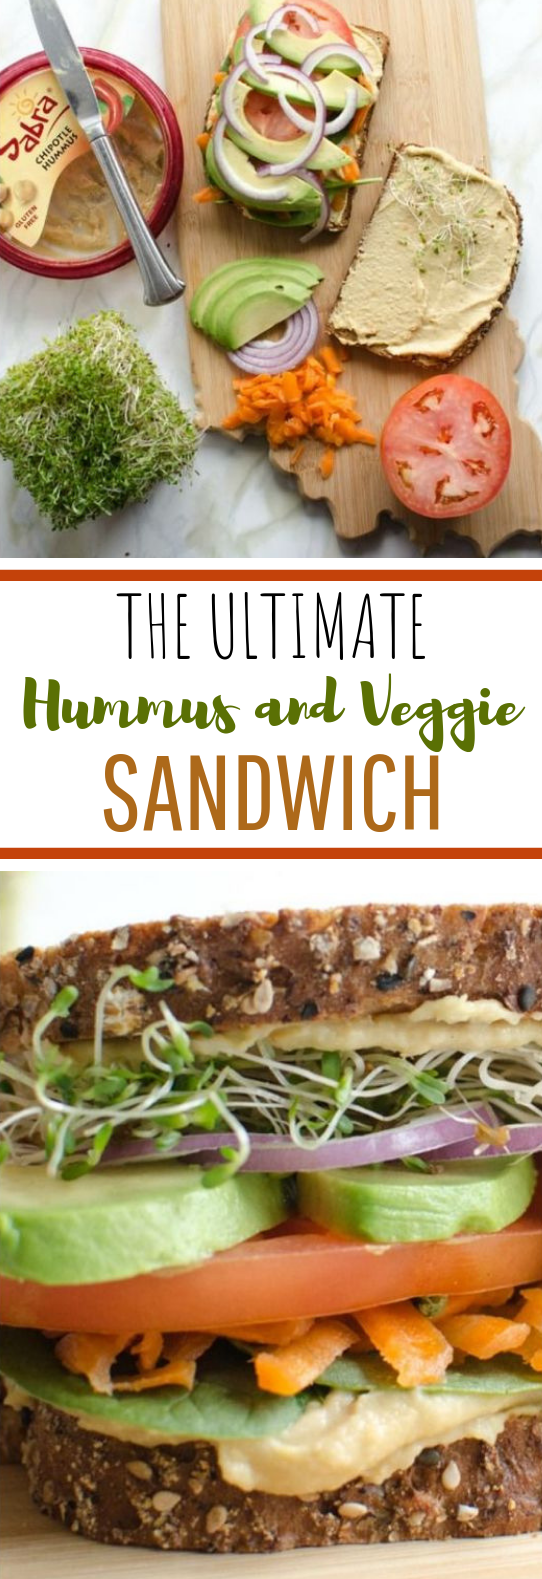 The Ultimate Hummus and Veggie Sandwich #vegetarian #healthy